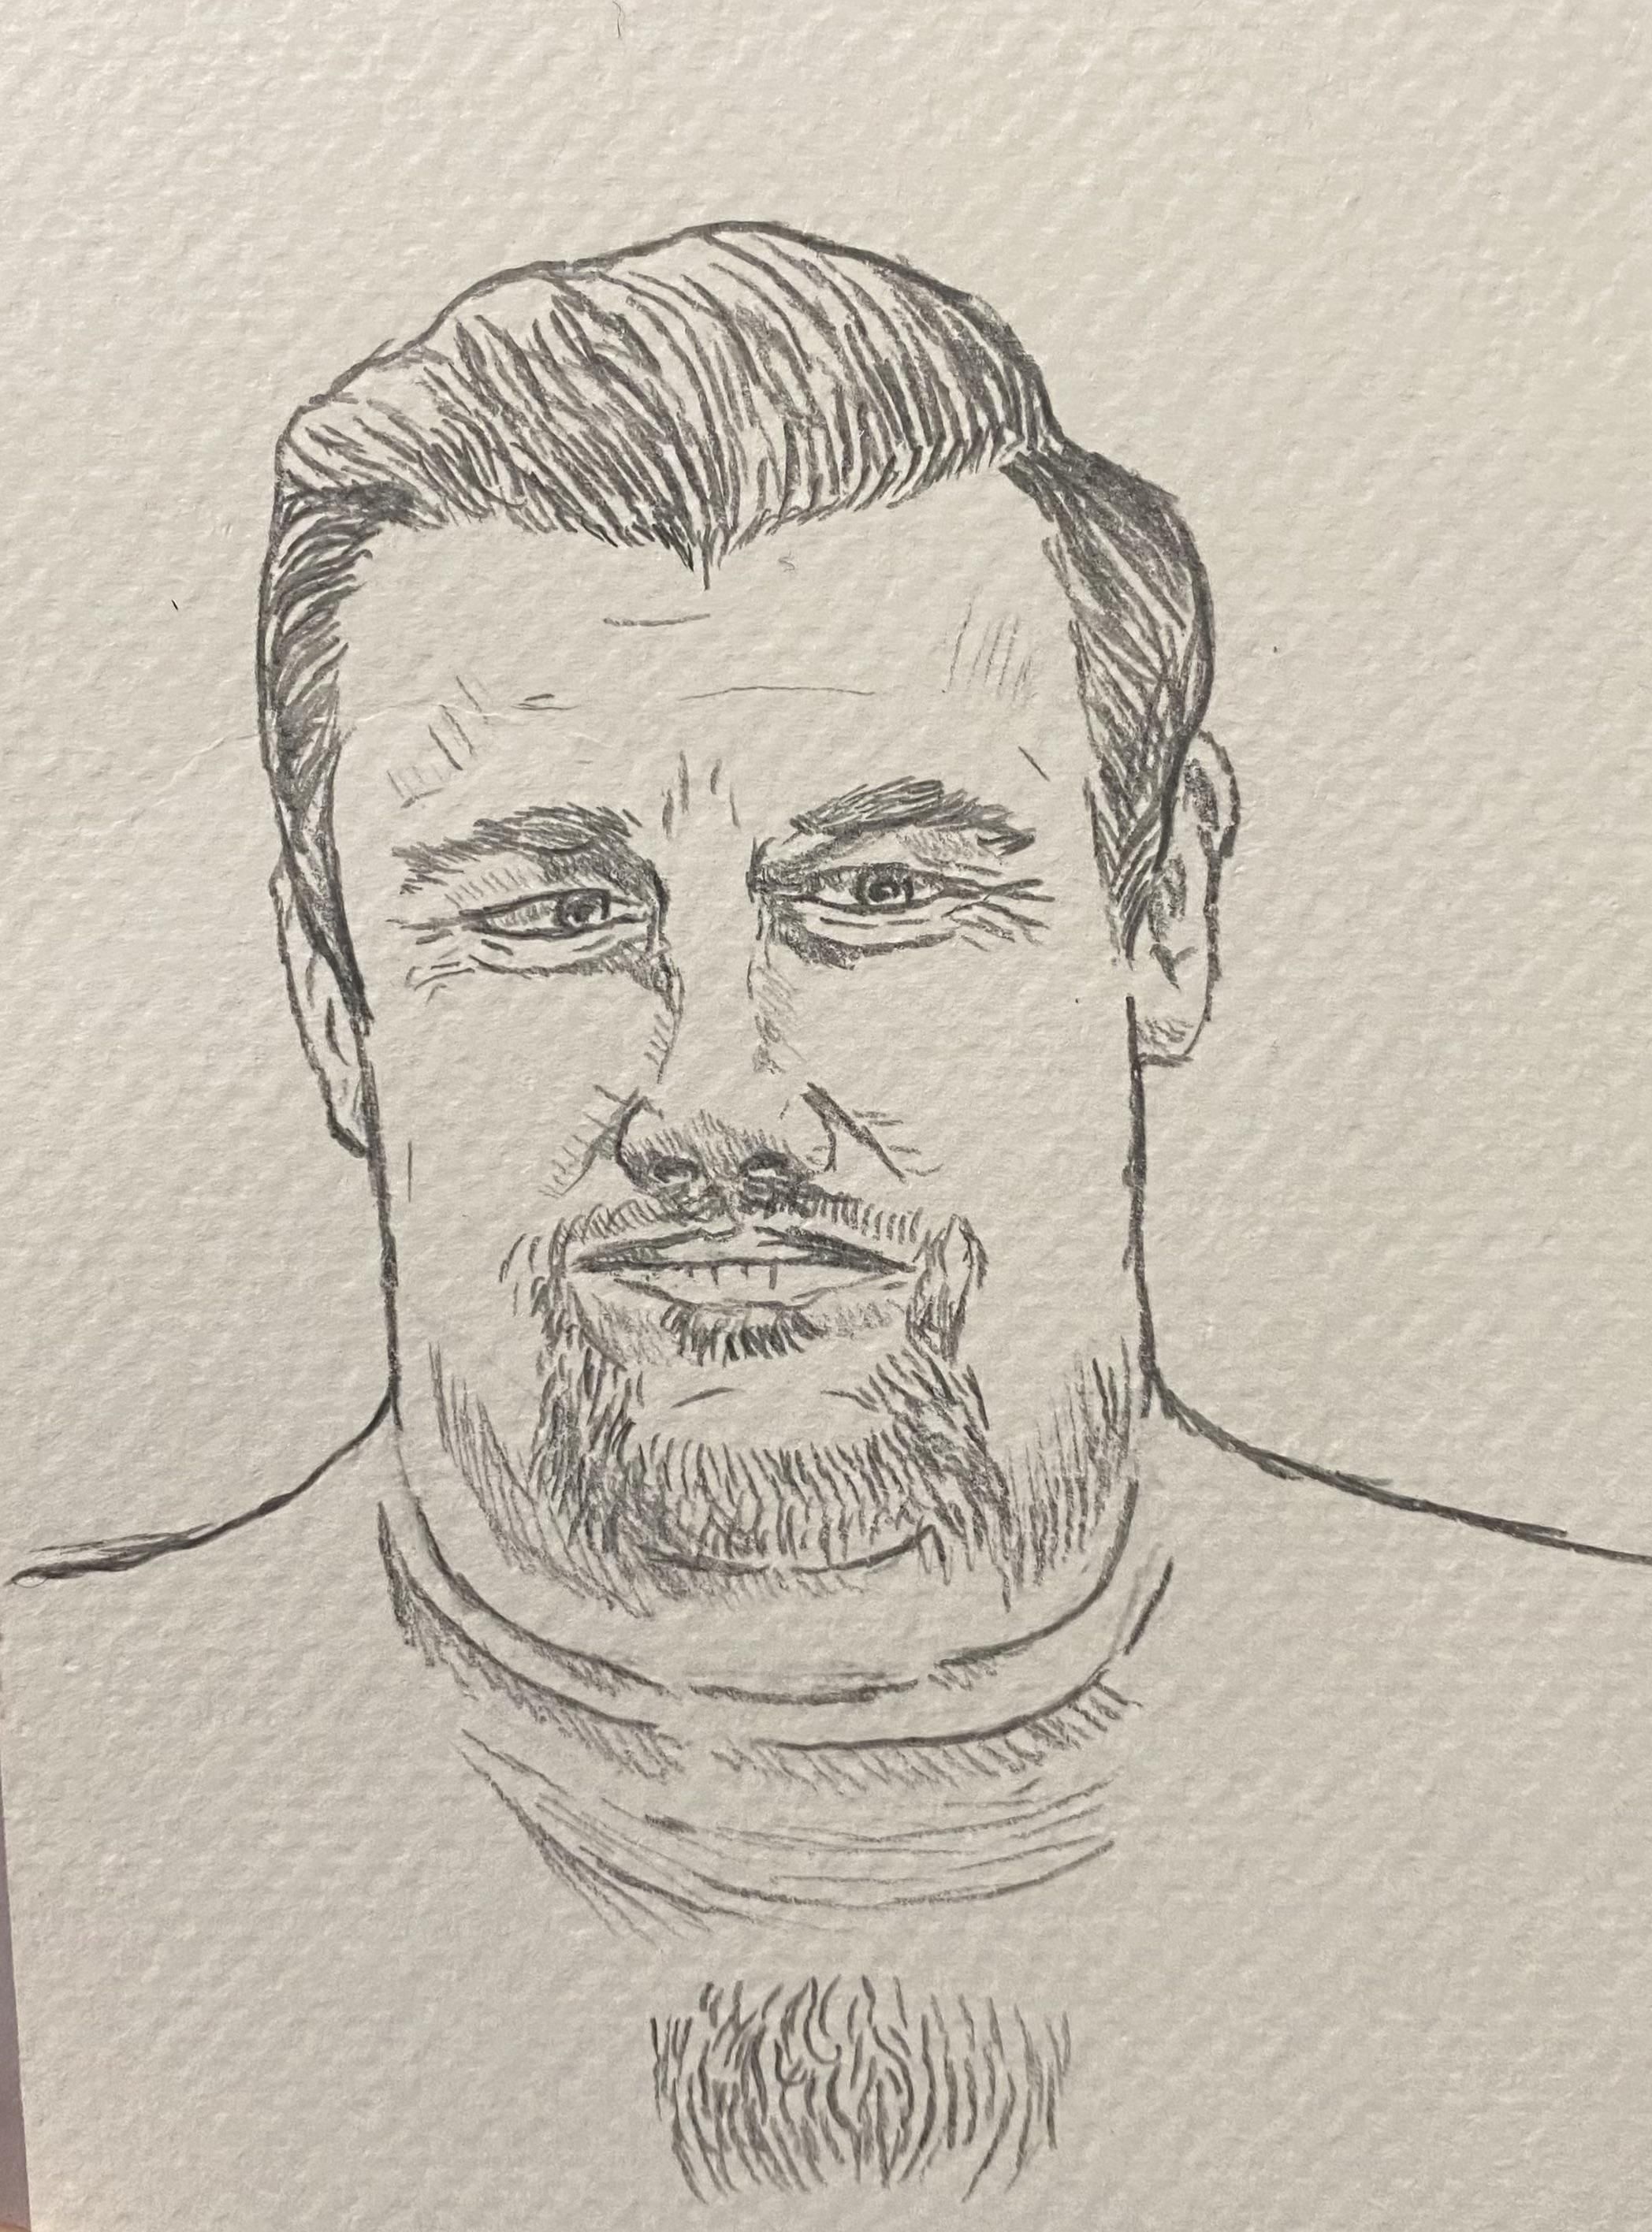 I was really stressed today, so to relax I drew a fat Leonardo DiCaprio.